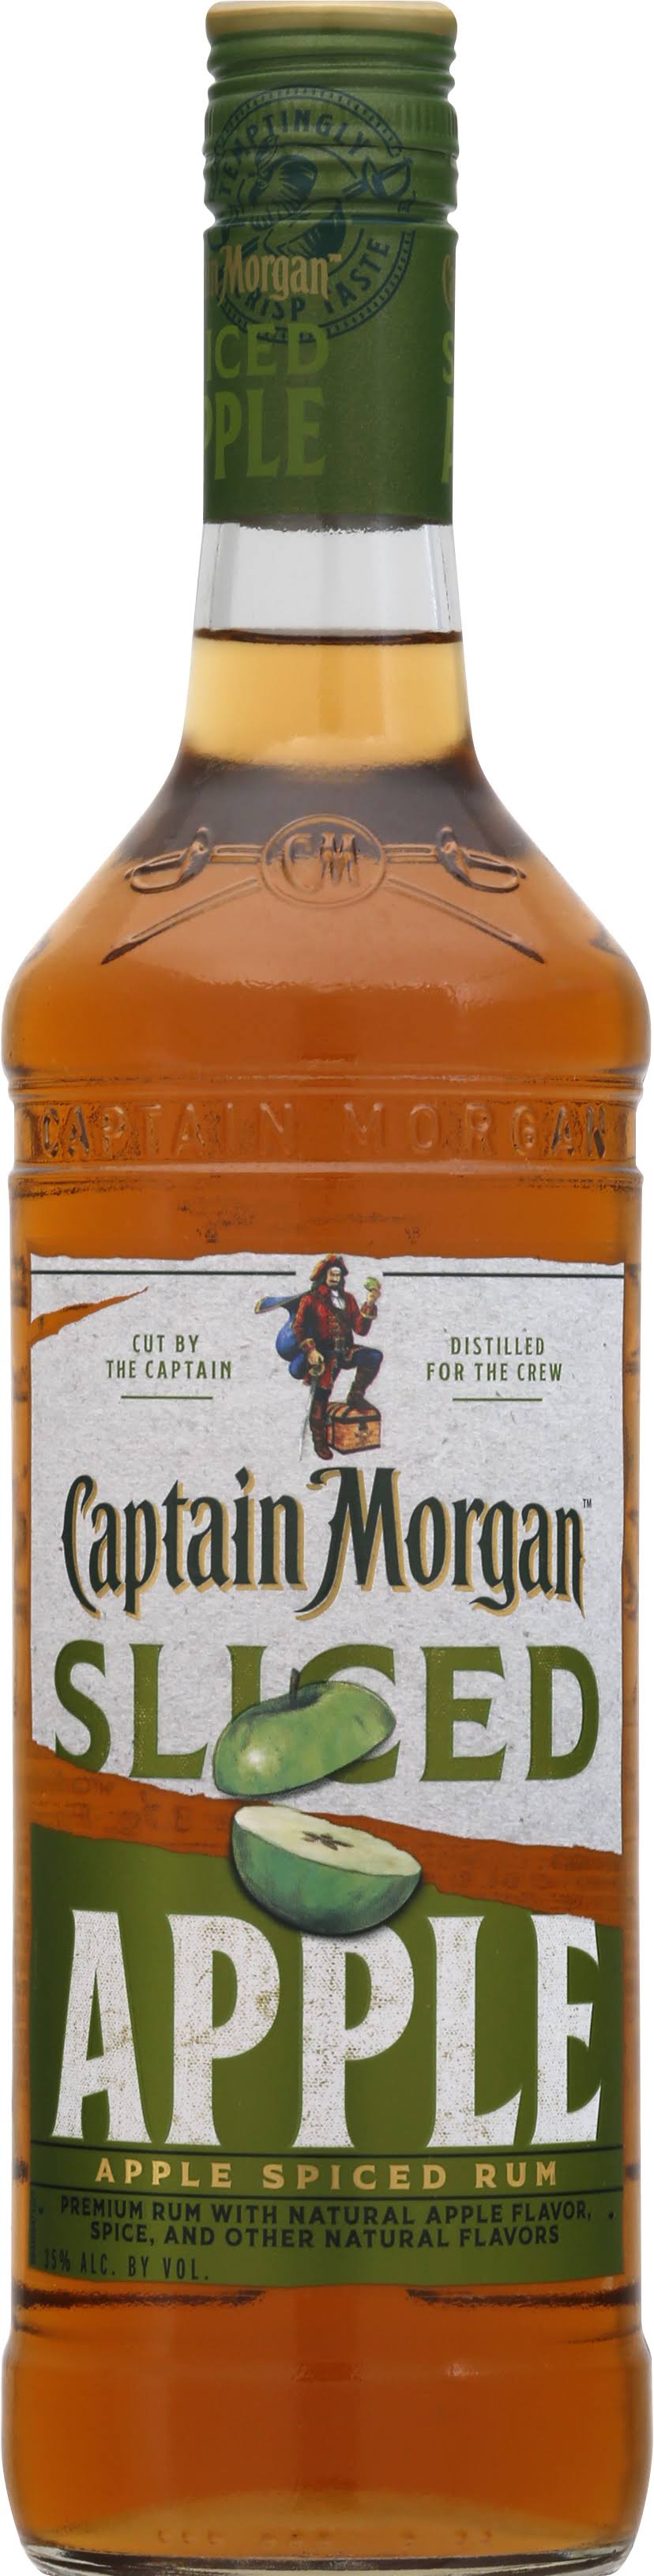 Captain Morgan Rum, Apple Spiced, Sliced Apple - 750 ml